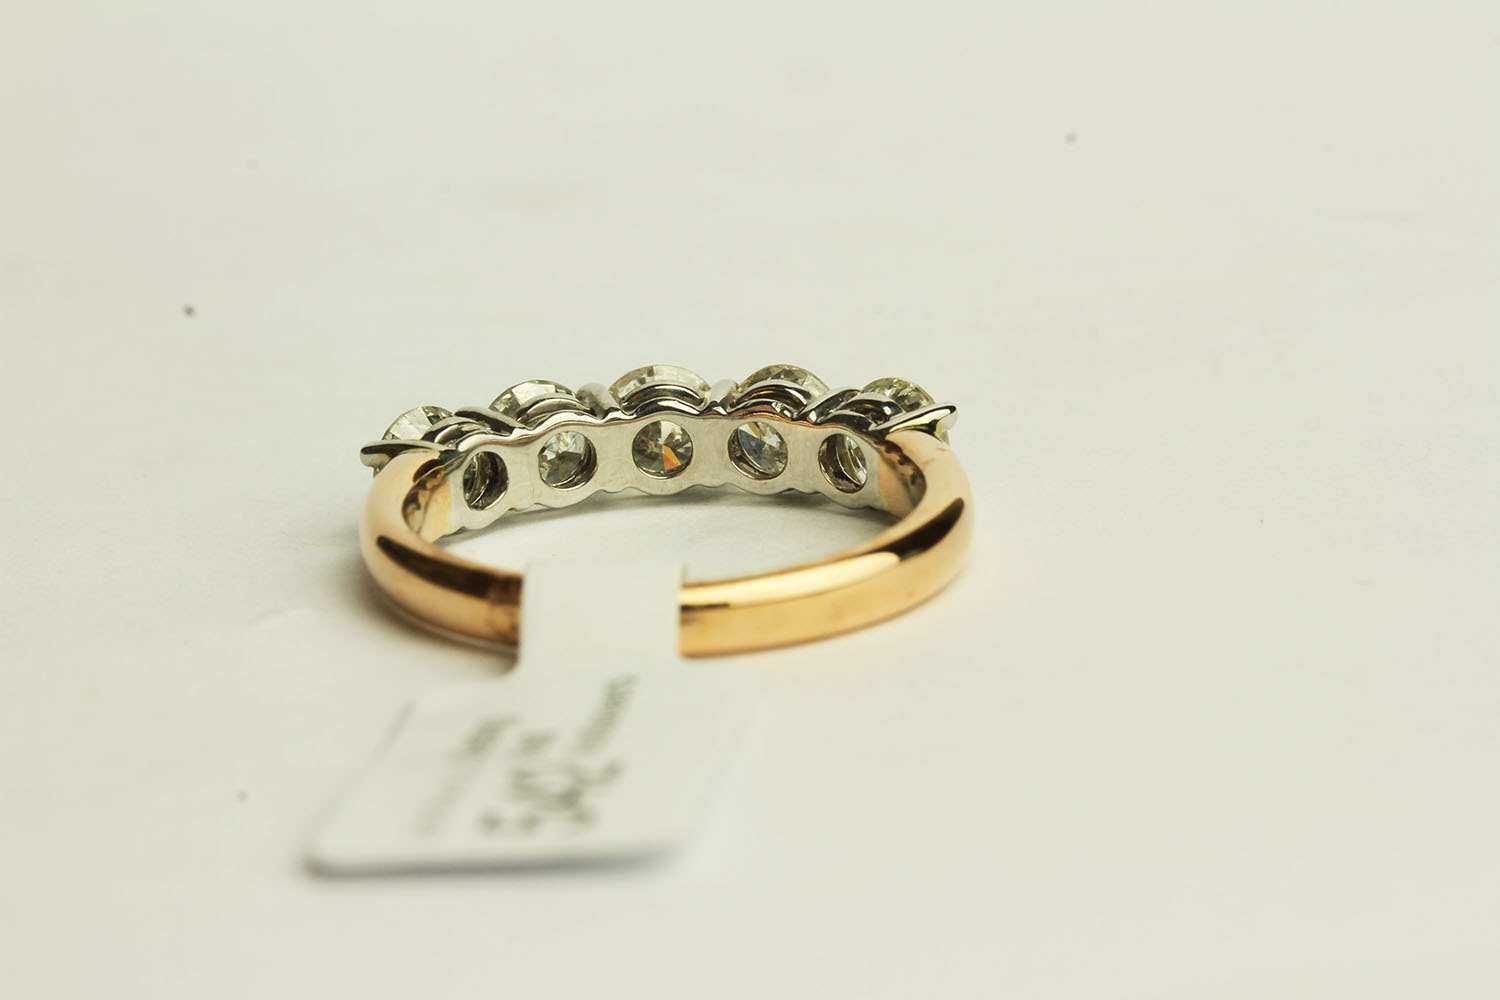 5 Stone Diamond Ring, set with 5 round brilliant cut diamonds - Image 3 of 3